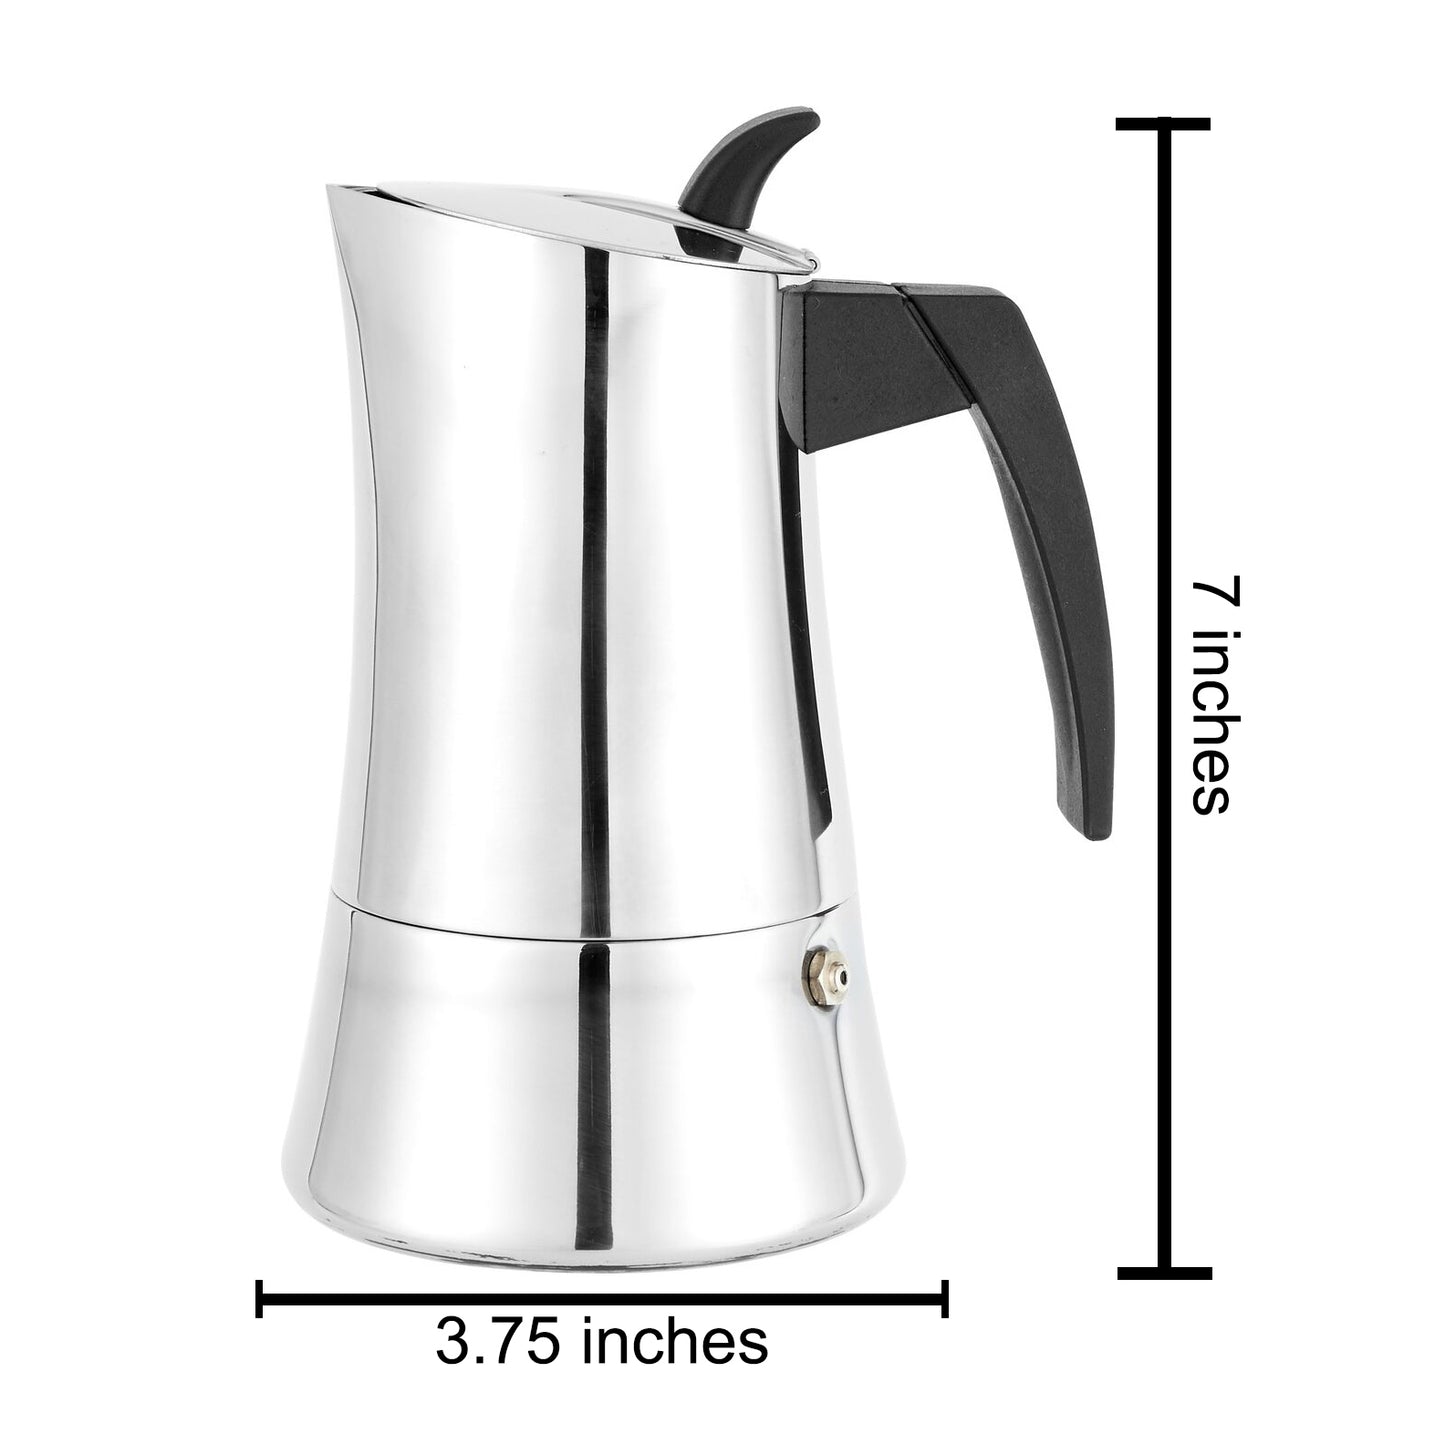 Cuisinox Capri Stainless Steel Espresso Coffee Maker Induction Moka Pot, 4-Cup (6 oz)